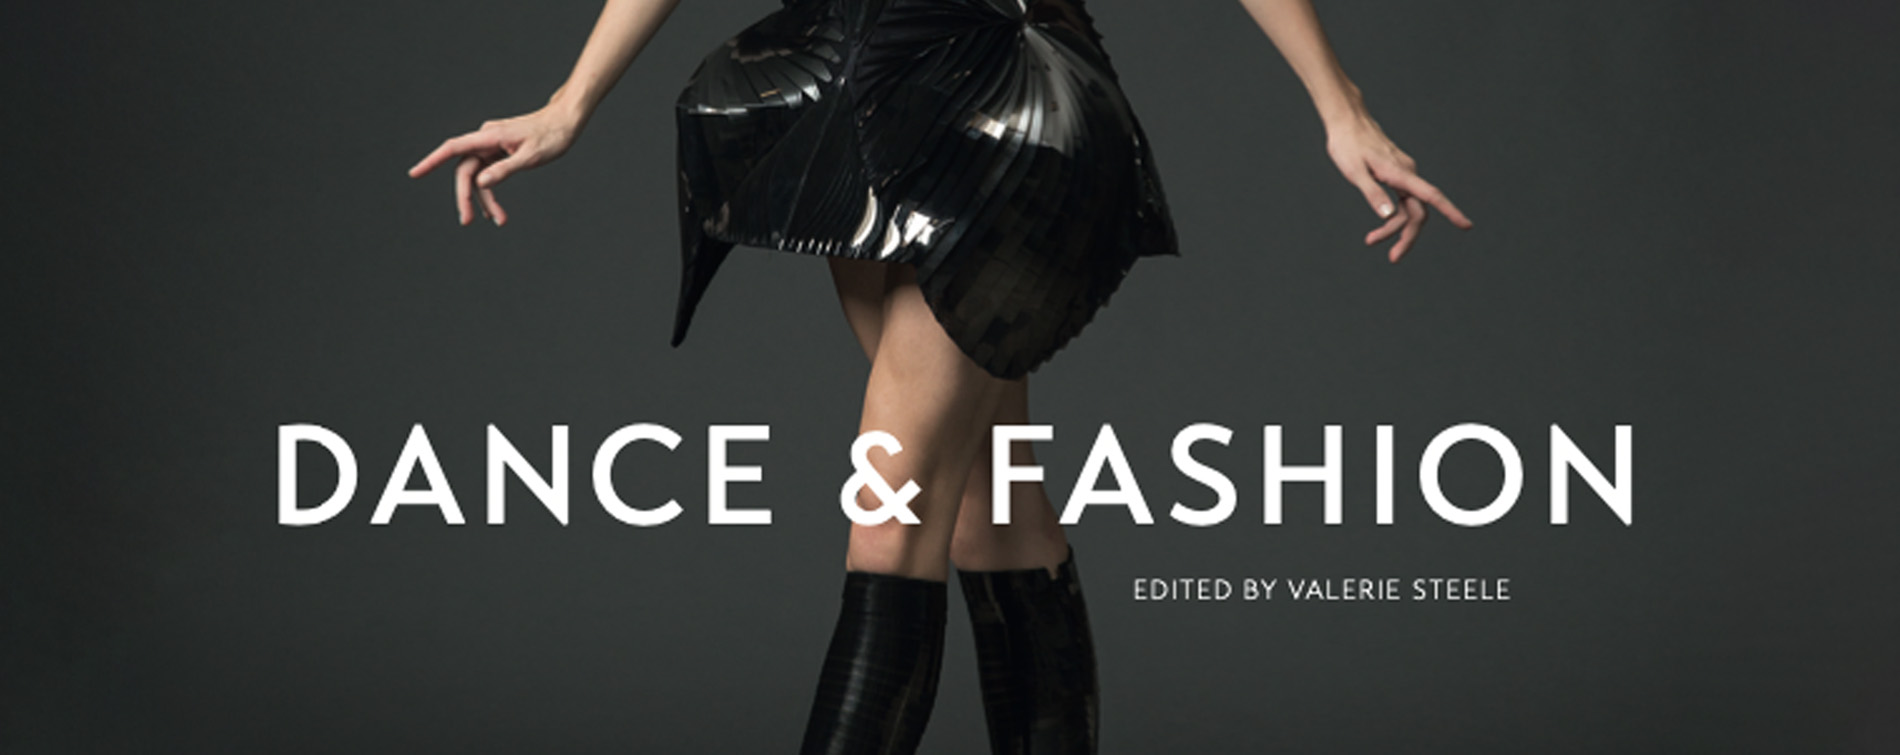 Dance and Fashion book cover of a ballerina in black tutu